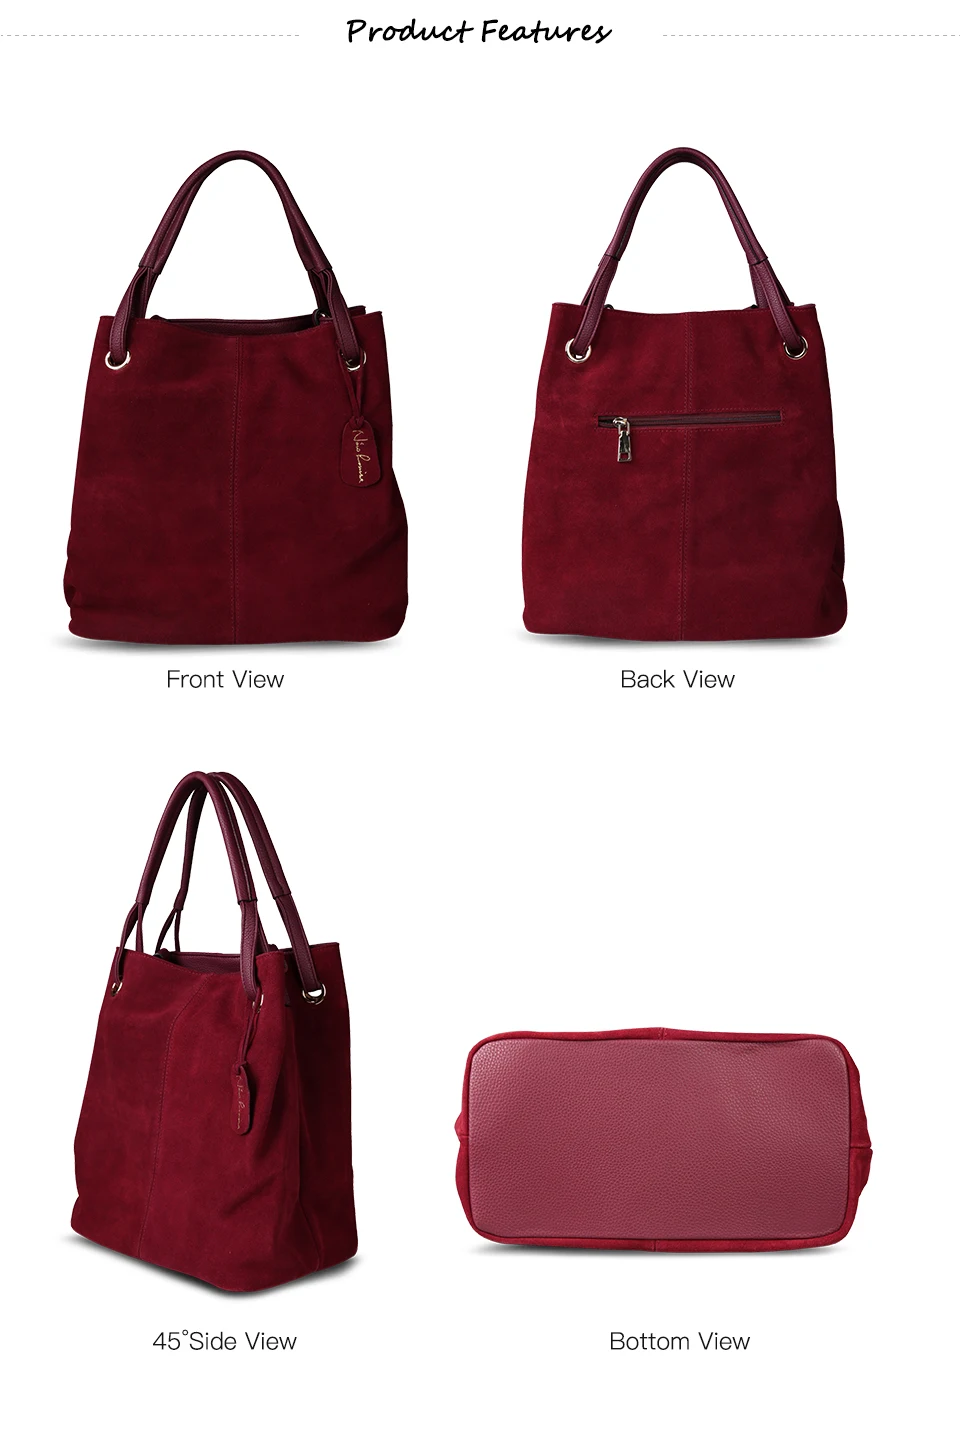 Nico Louise Women Real Split Suede Leather Tote Bag,New Leisure Large Top-handle Bags Lady Casual Crossbody Shoulder Handbag